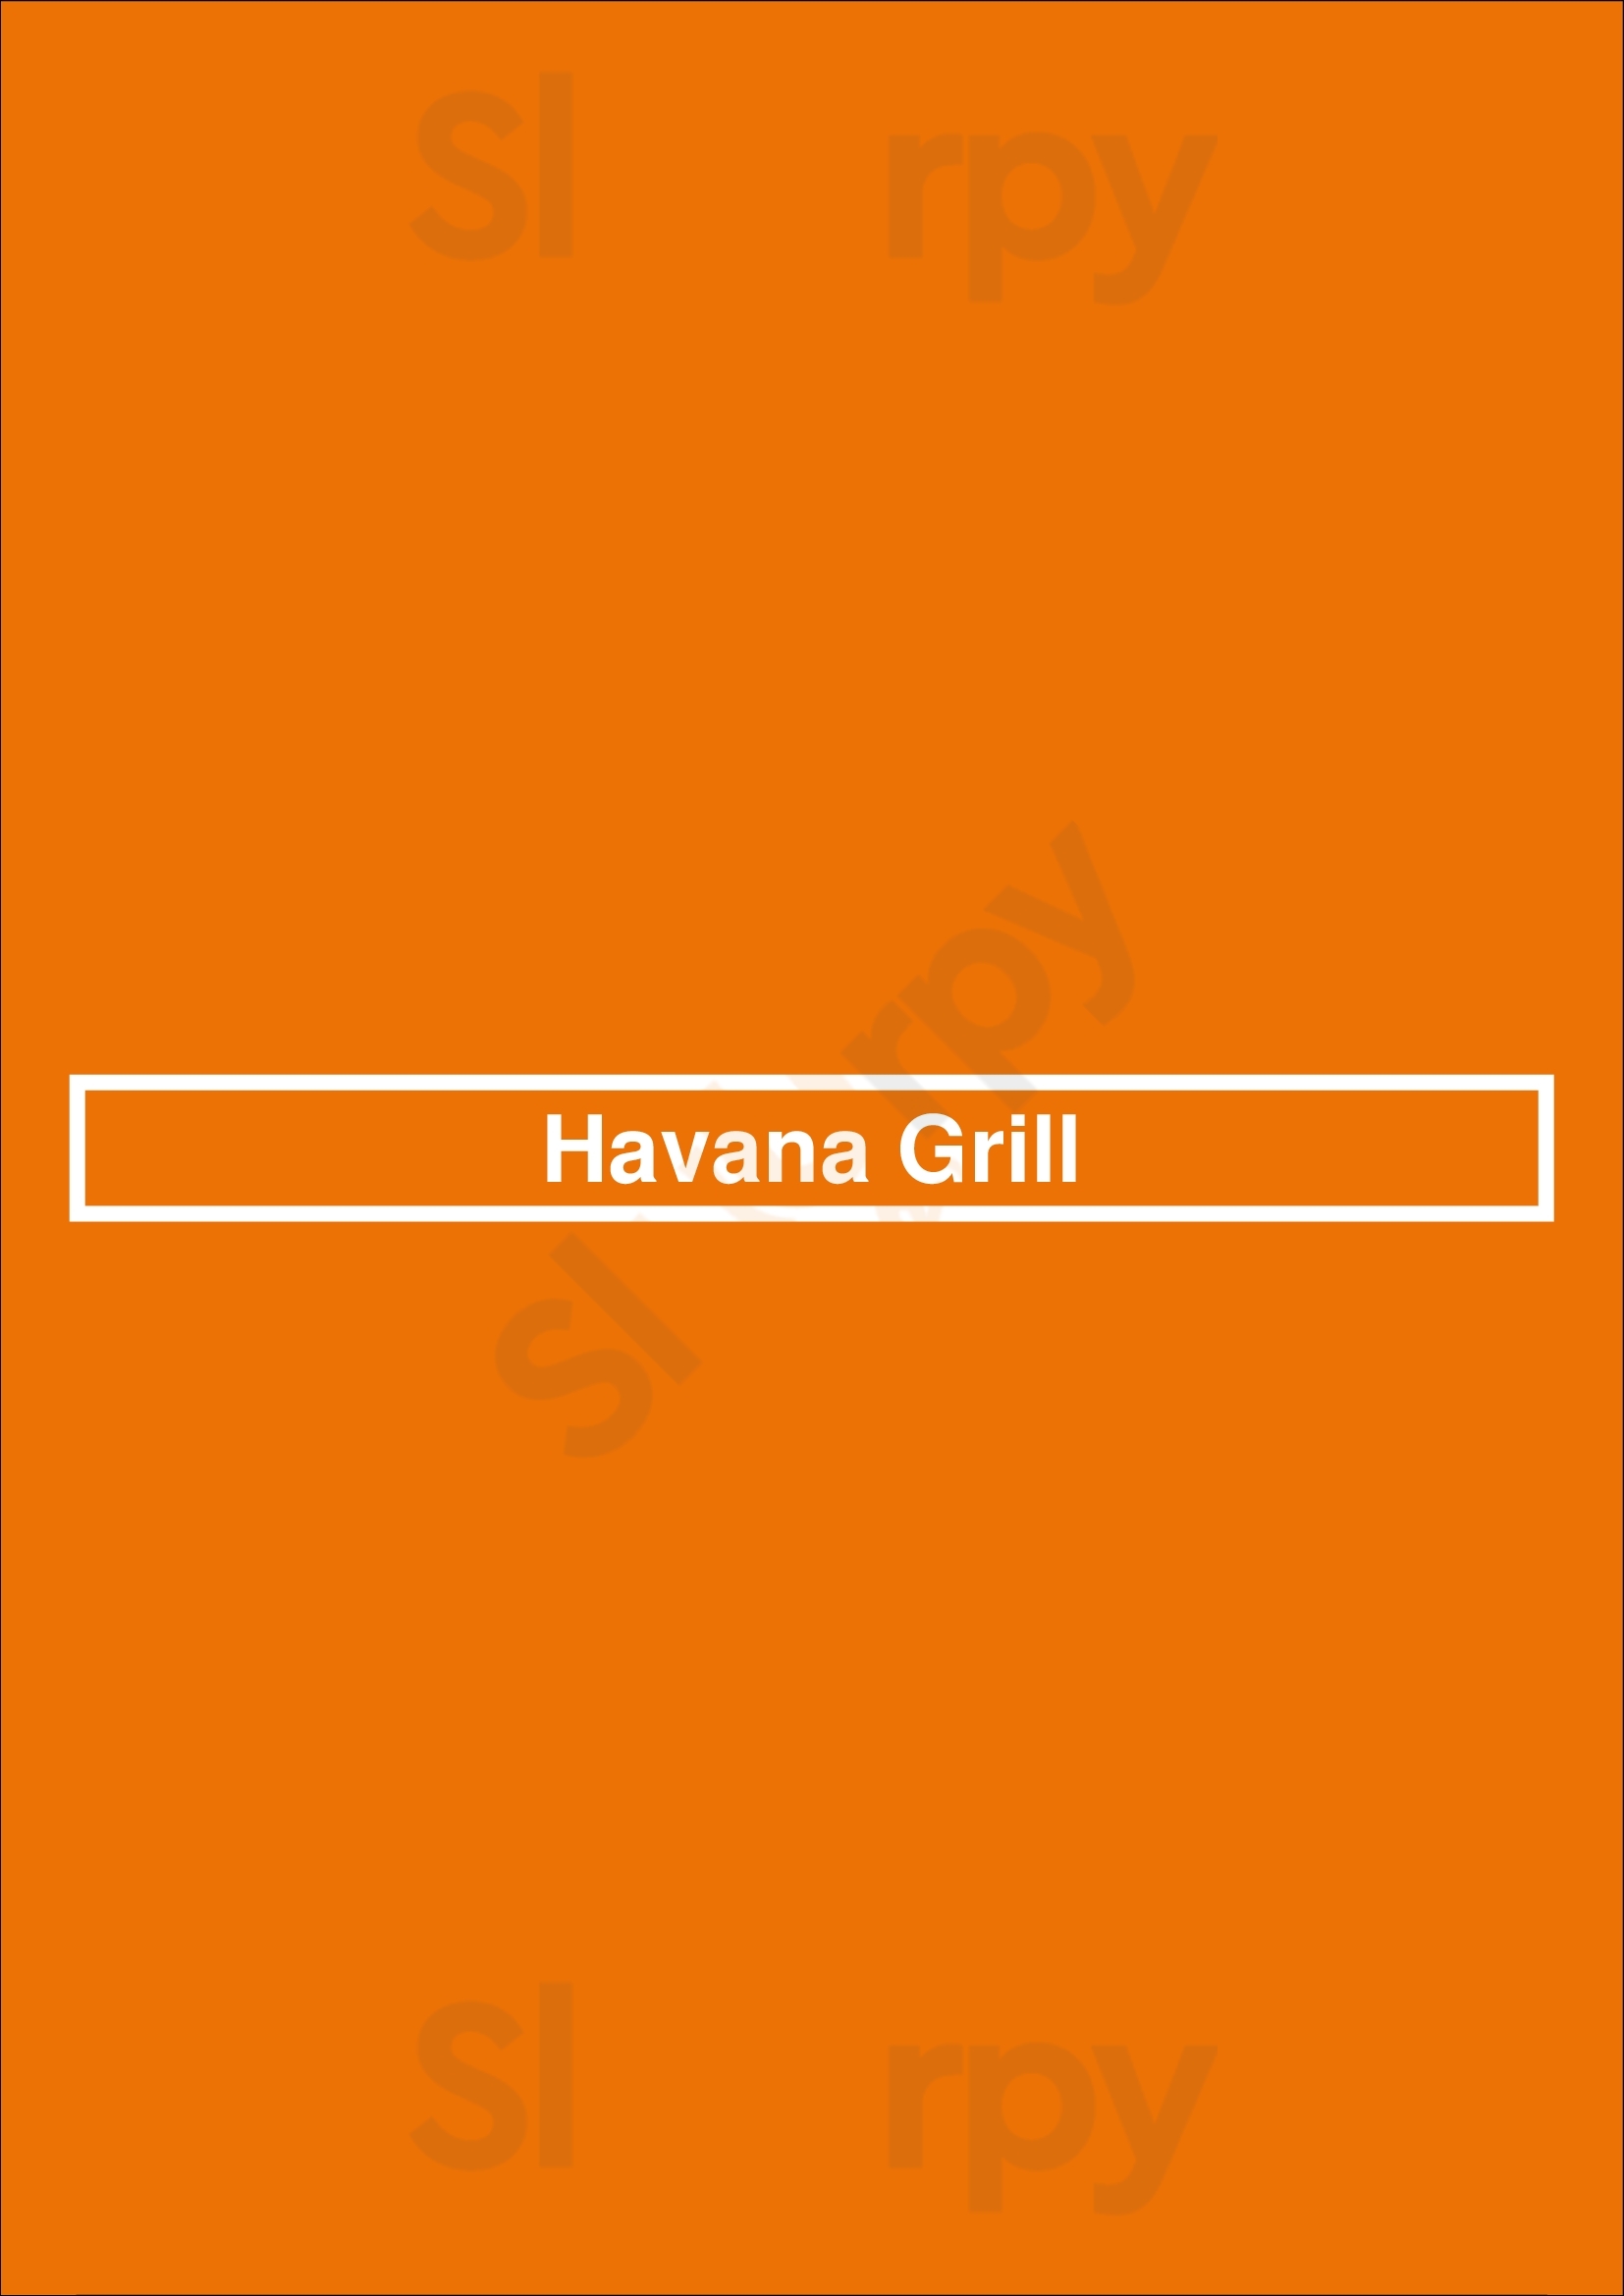 Havana Grill Chicago Menu - 1